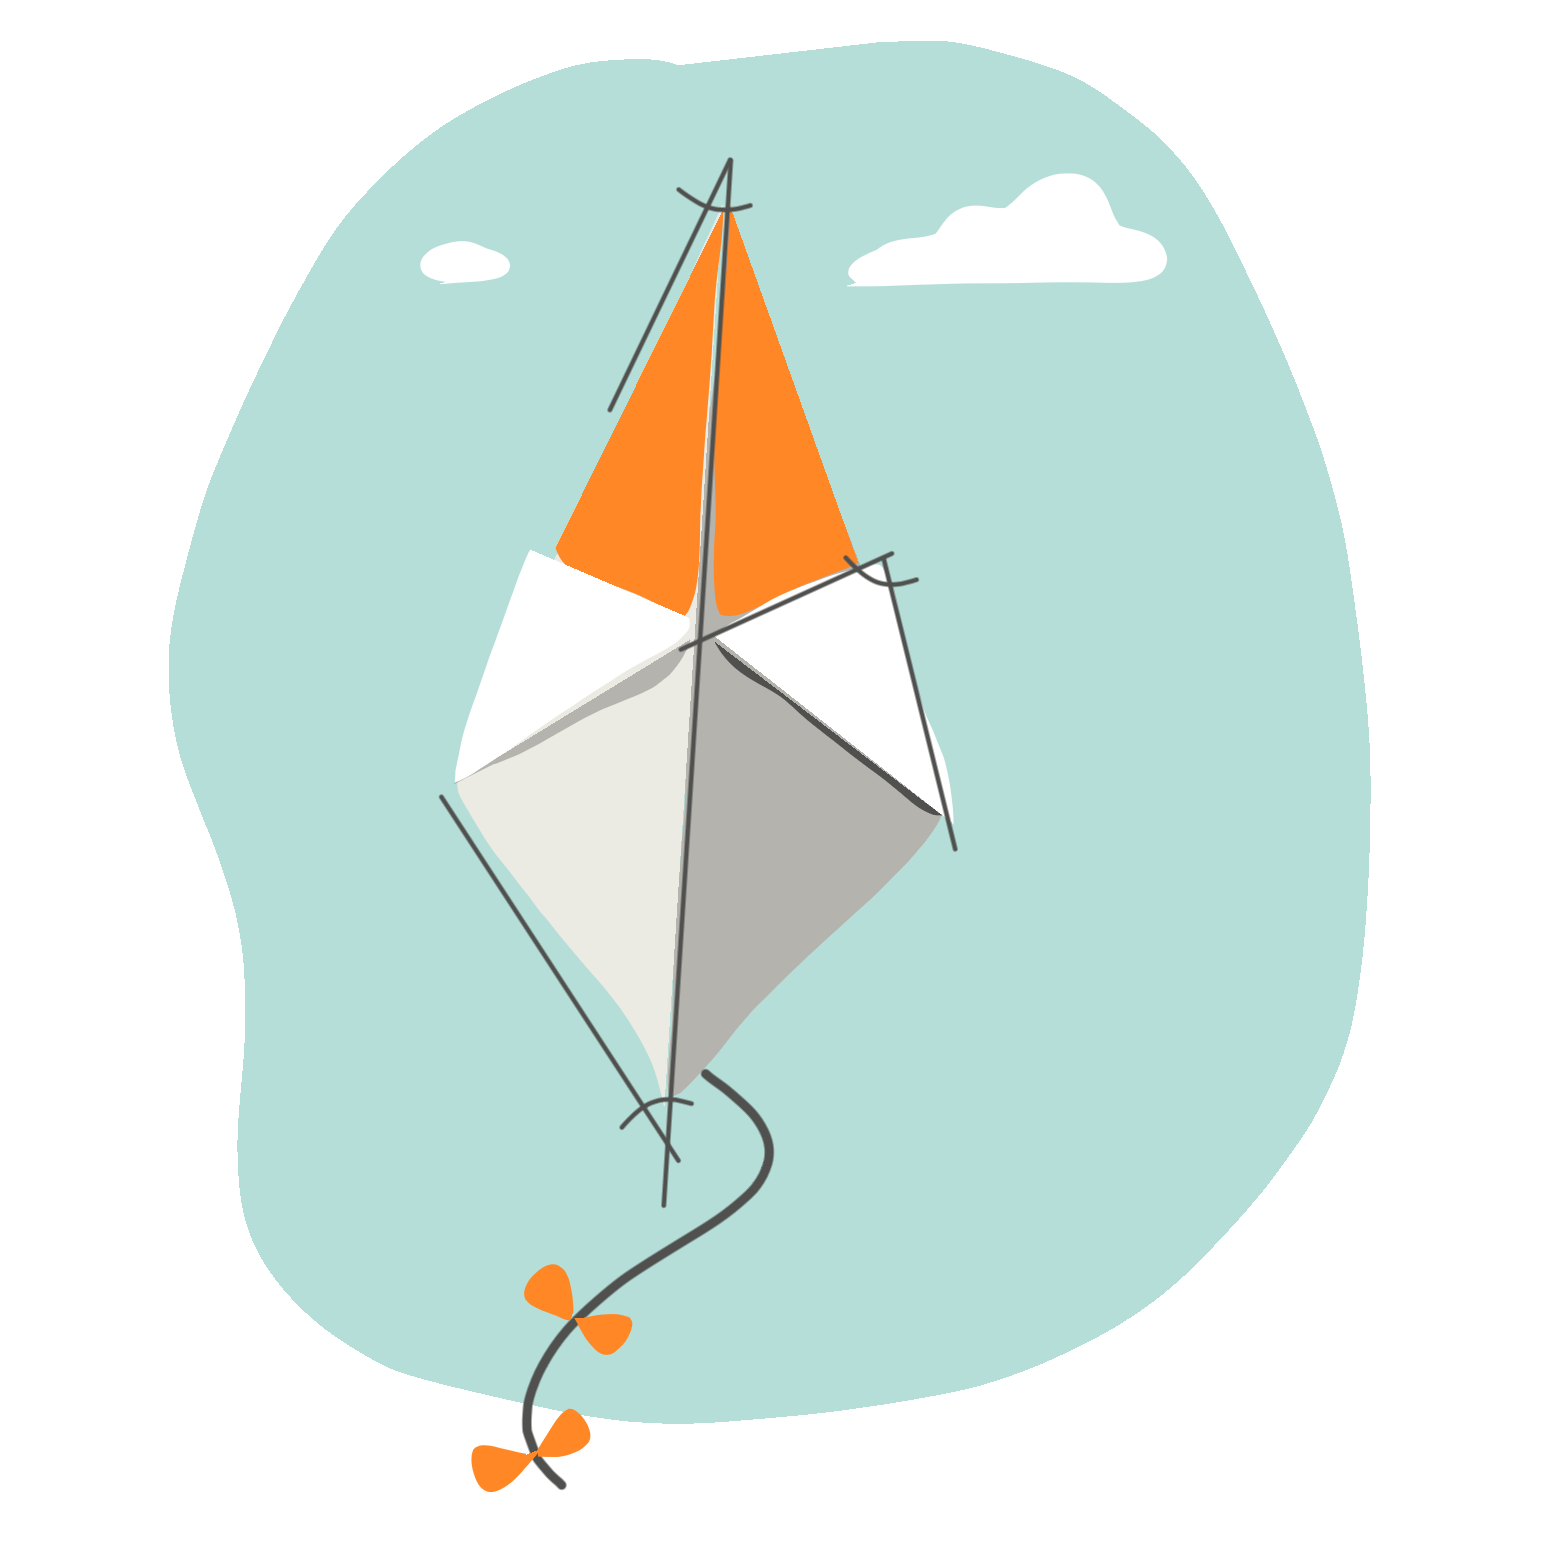 Illustration of a kite